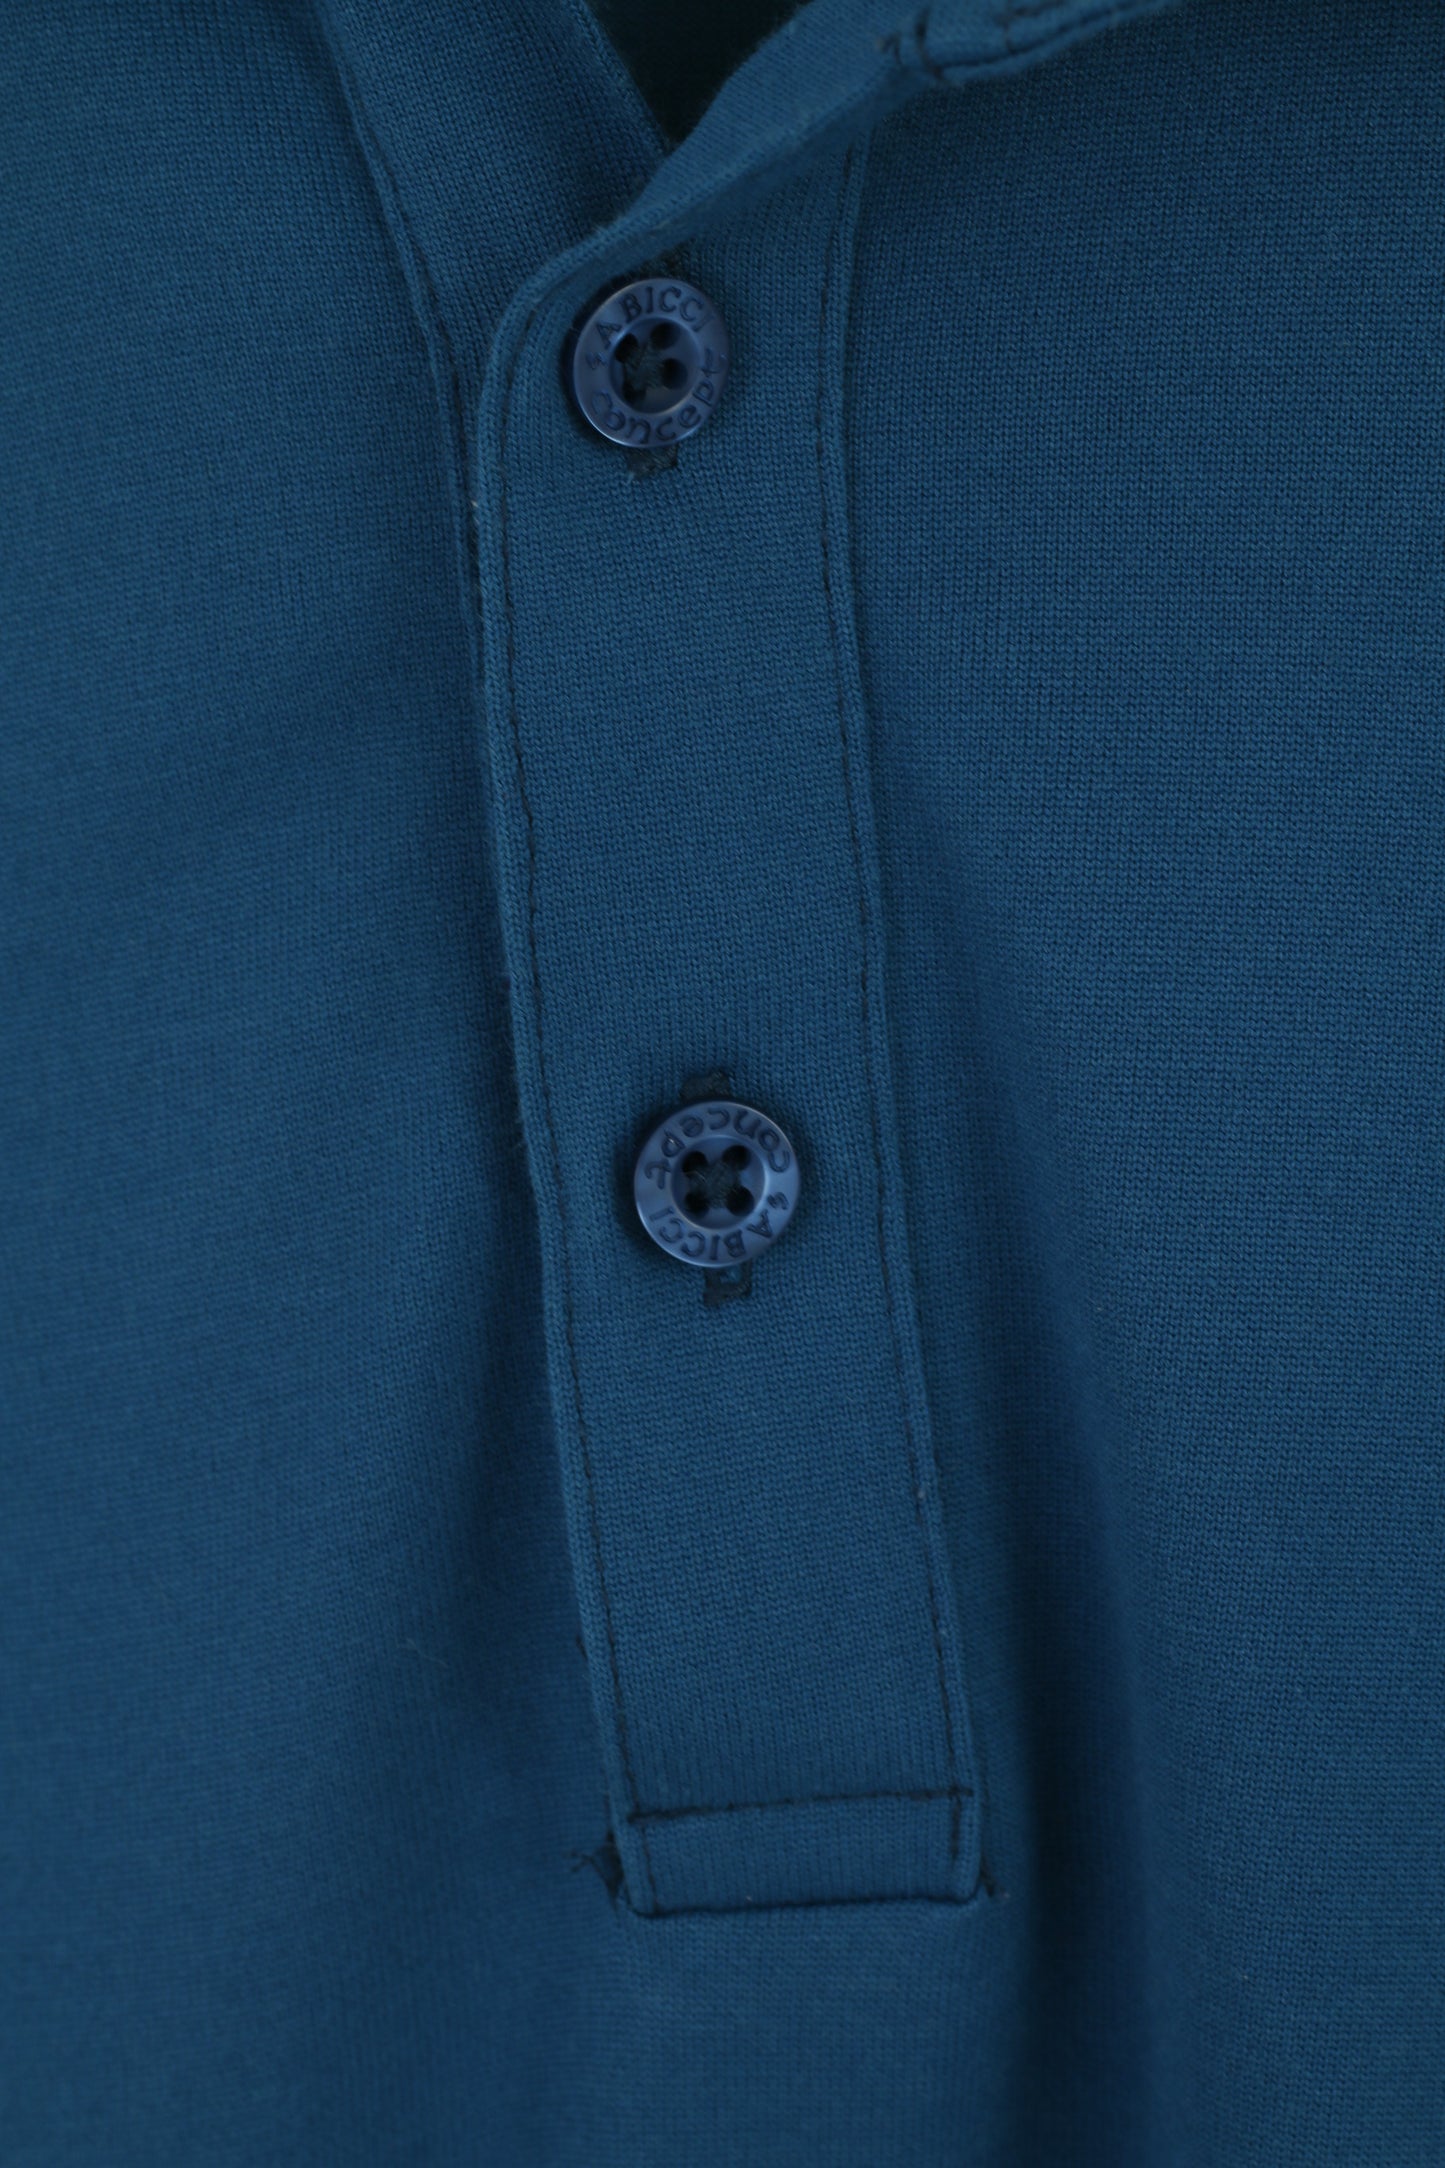 GABICCI Collezione Men XL Polo Shirt Sea Green Cotton Soft Detailed Buttons Top